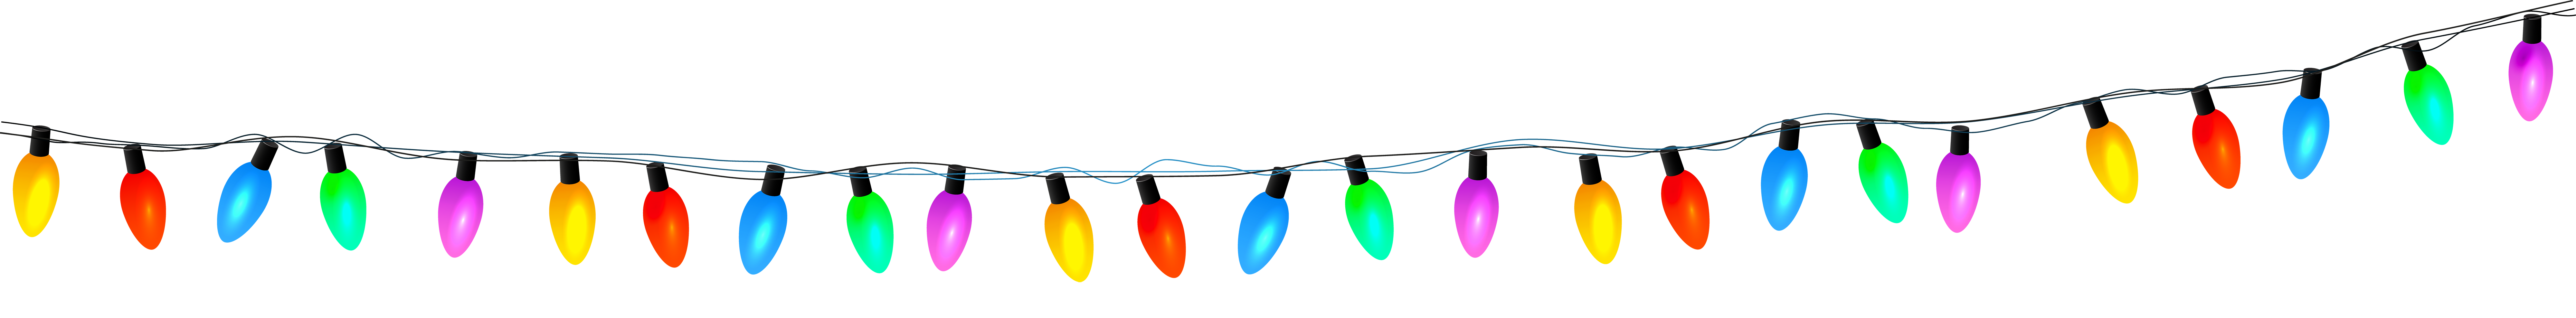 Christmas Lights Transparent PNG Clip Art Image clipart 